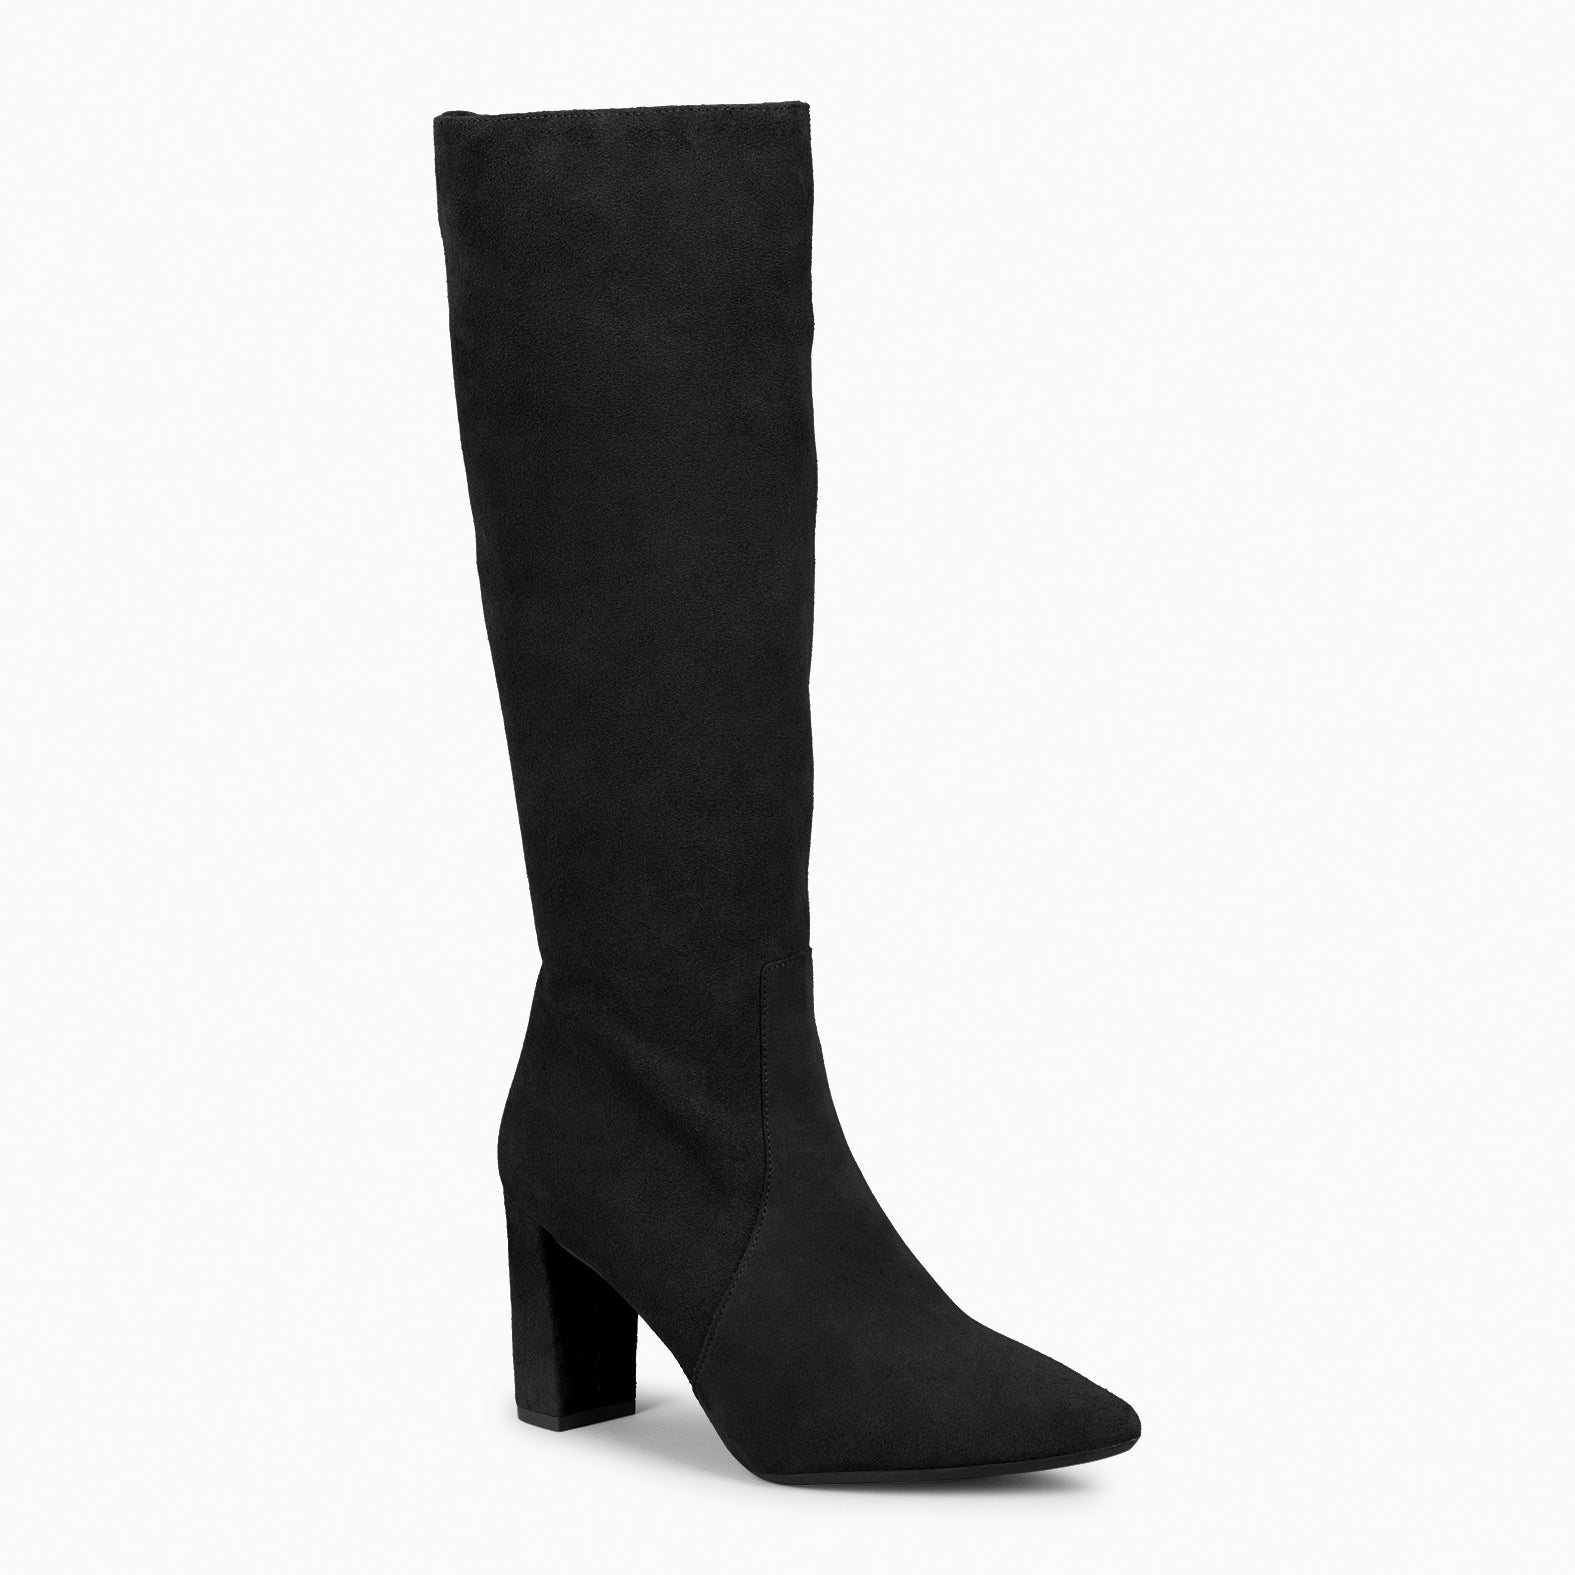 URBAN BOOT - BLACK high heel boots with zipper